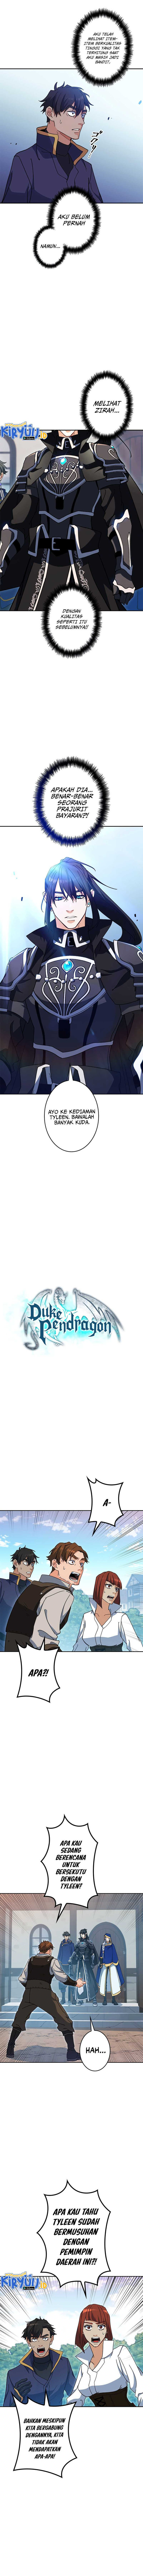 White Dragon Duke: Pendragon Chapter 66